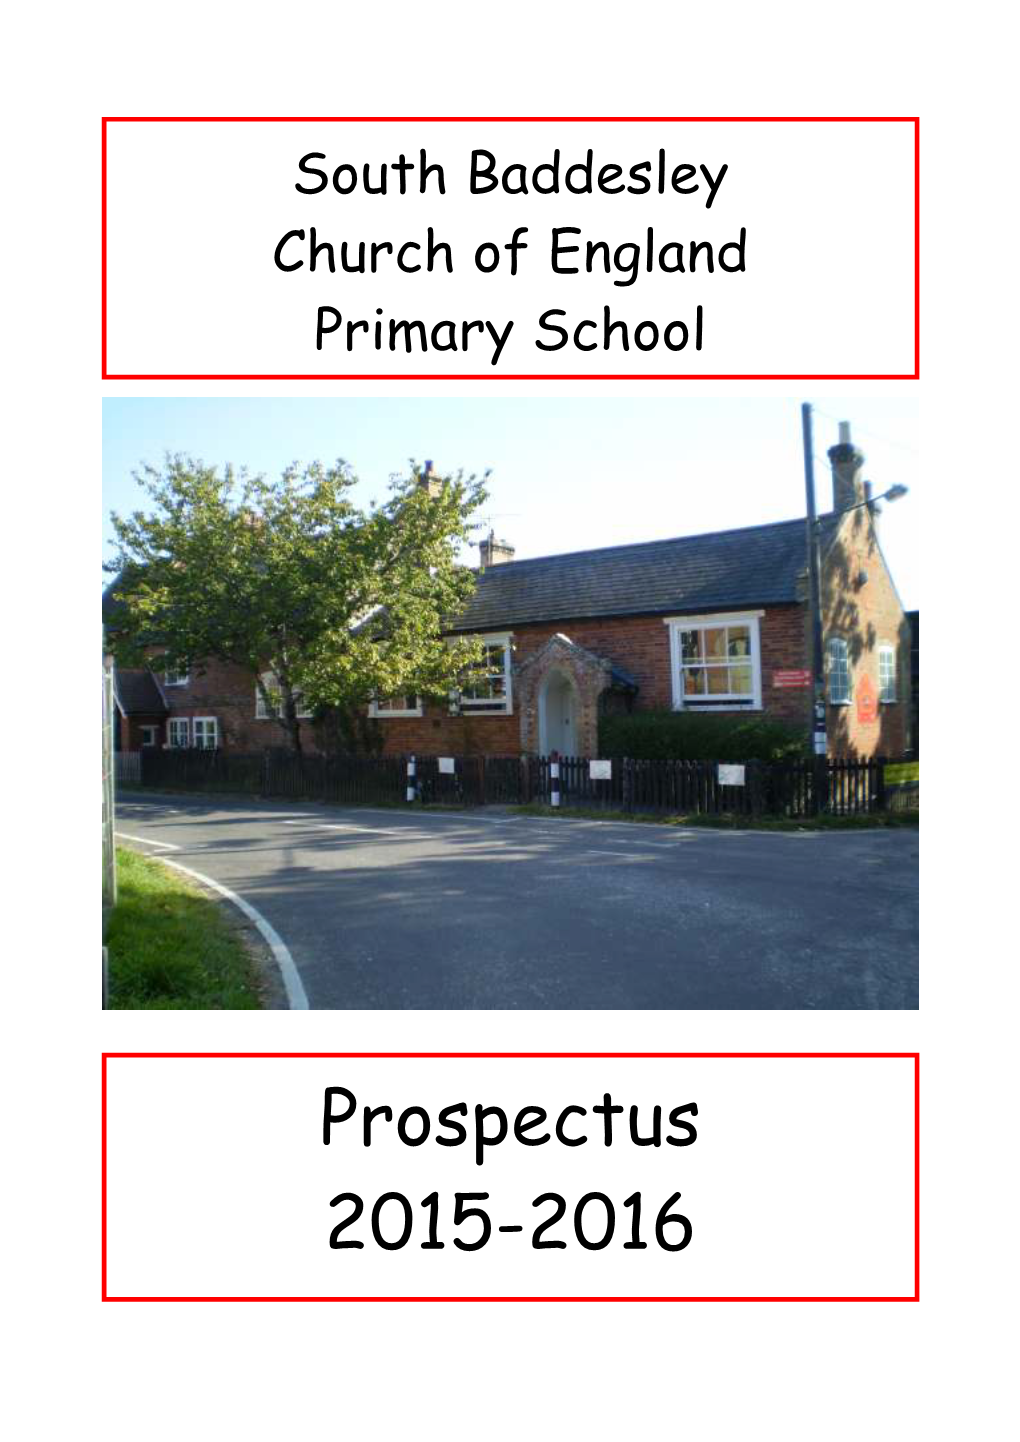 South Baddesley Church of England Primary School